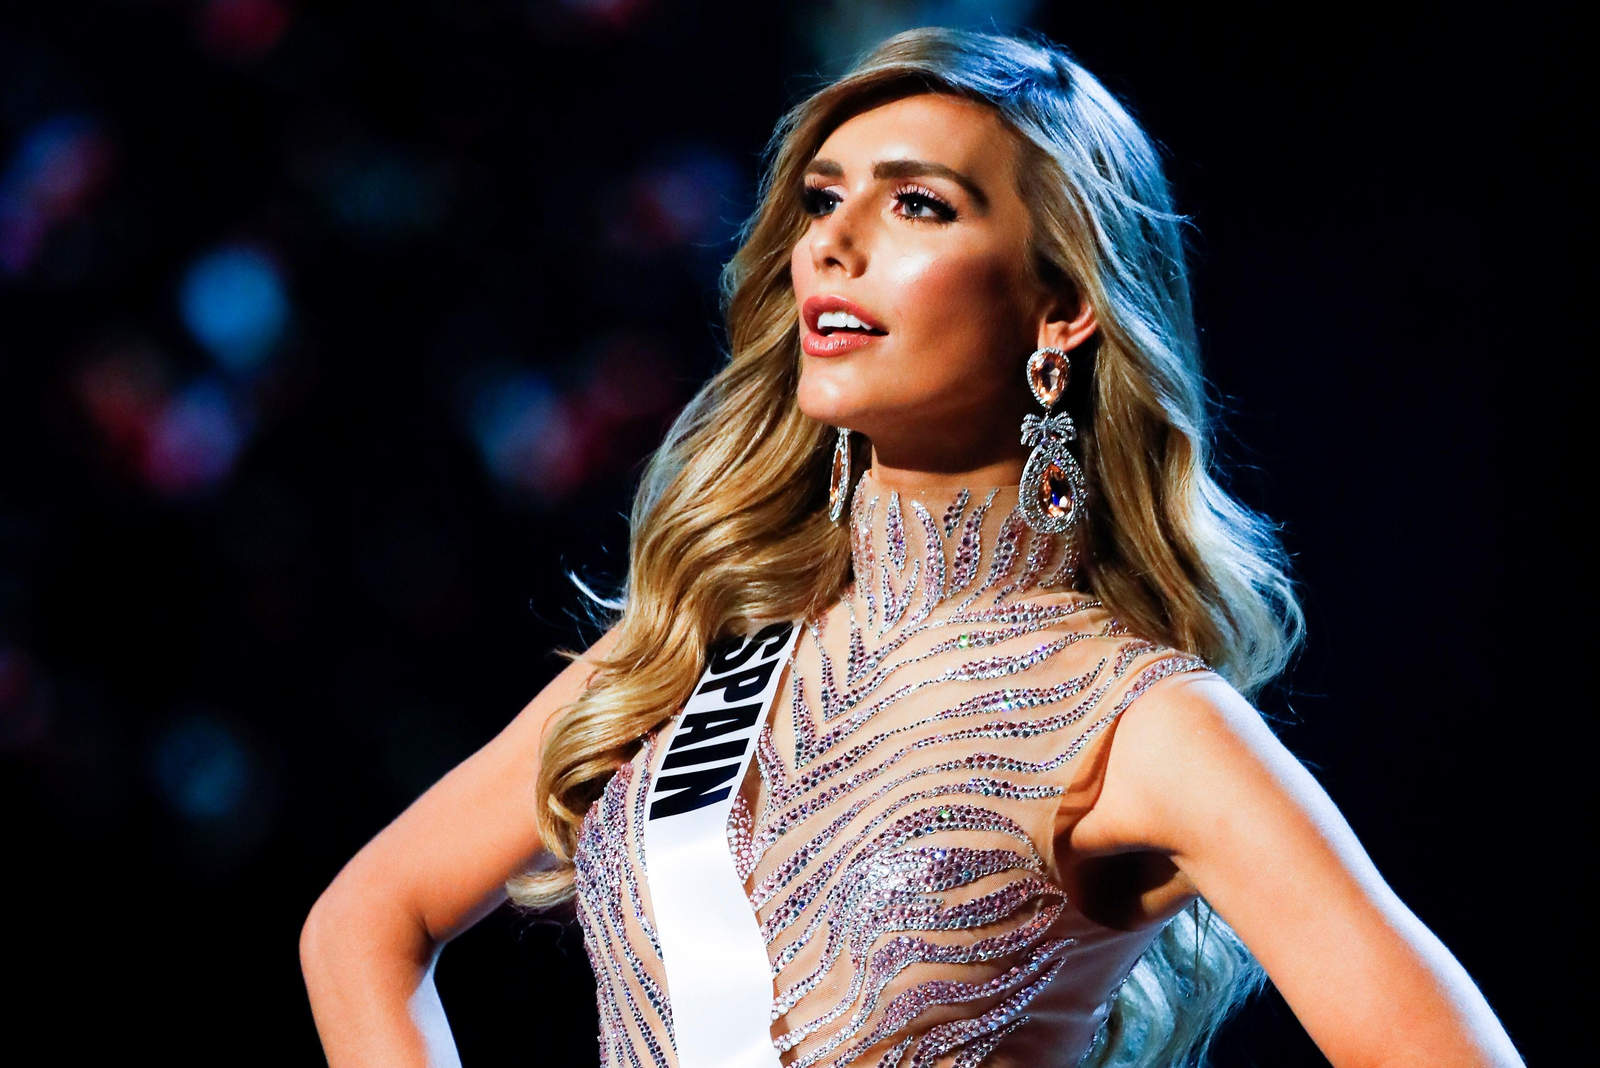 Ultiman detalles para gala final de Miss Universo El Siglo de Torreón